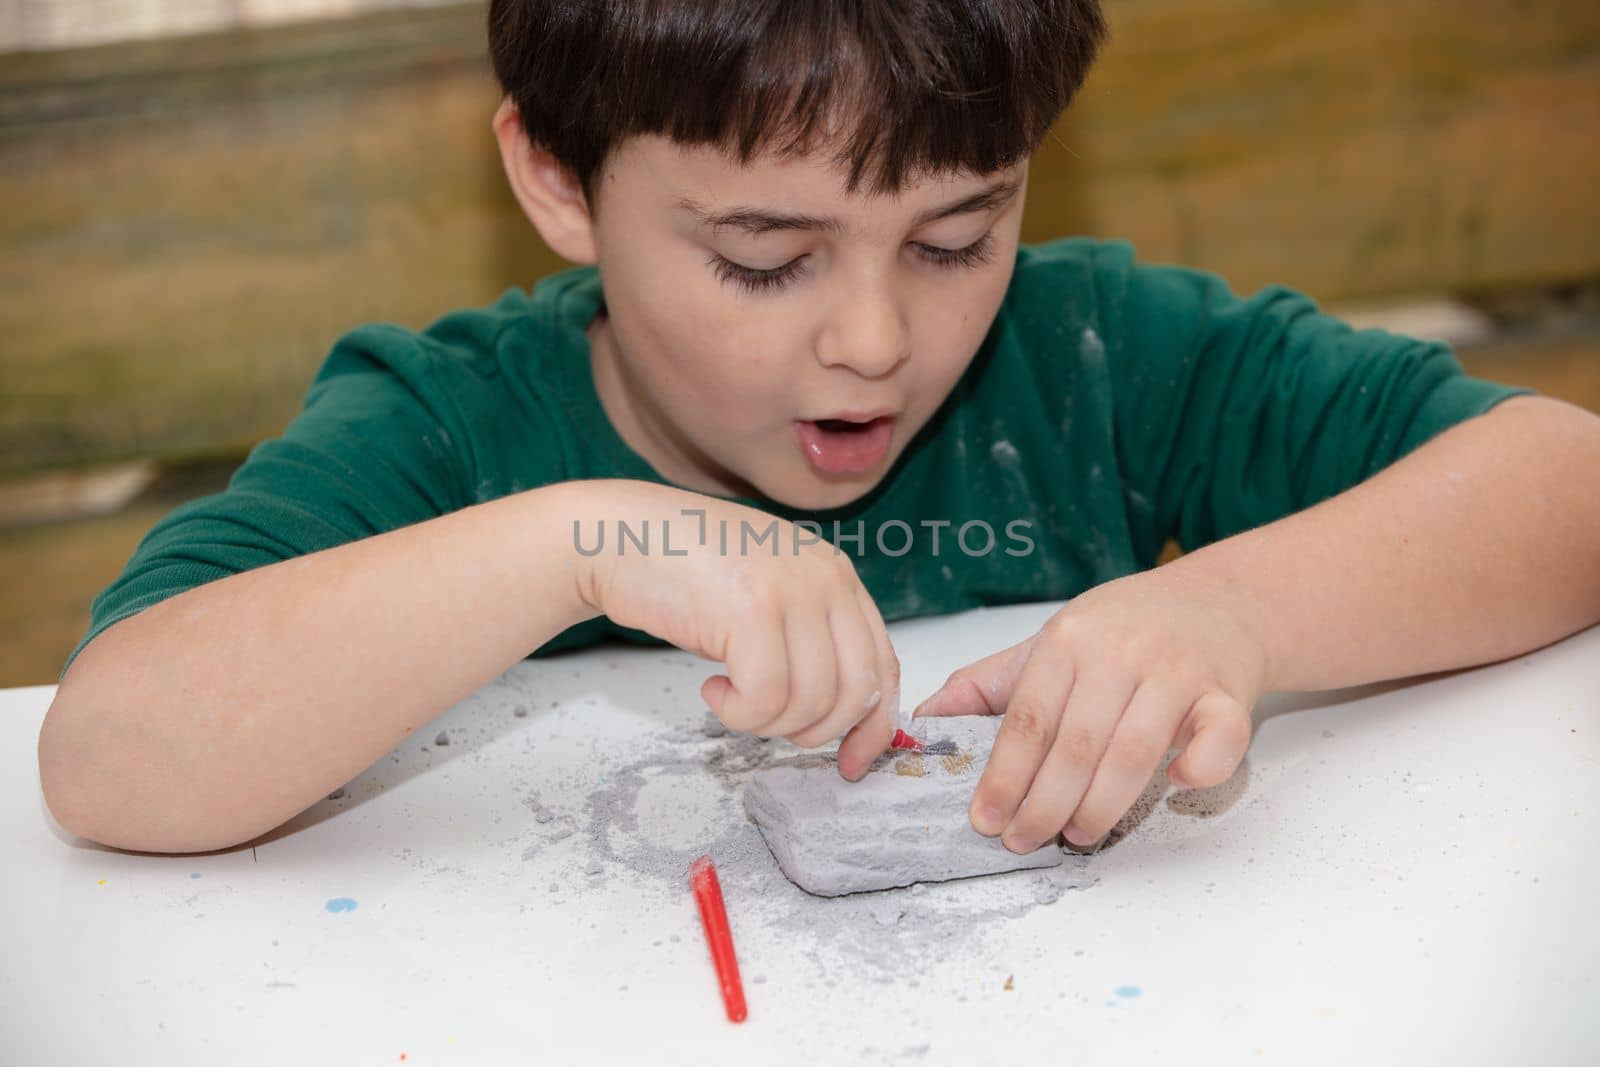 children's entertainment, a child plays in an archaeologist, children's hands dig dinosaur bones